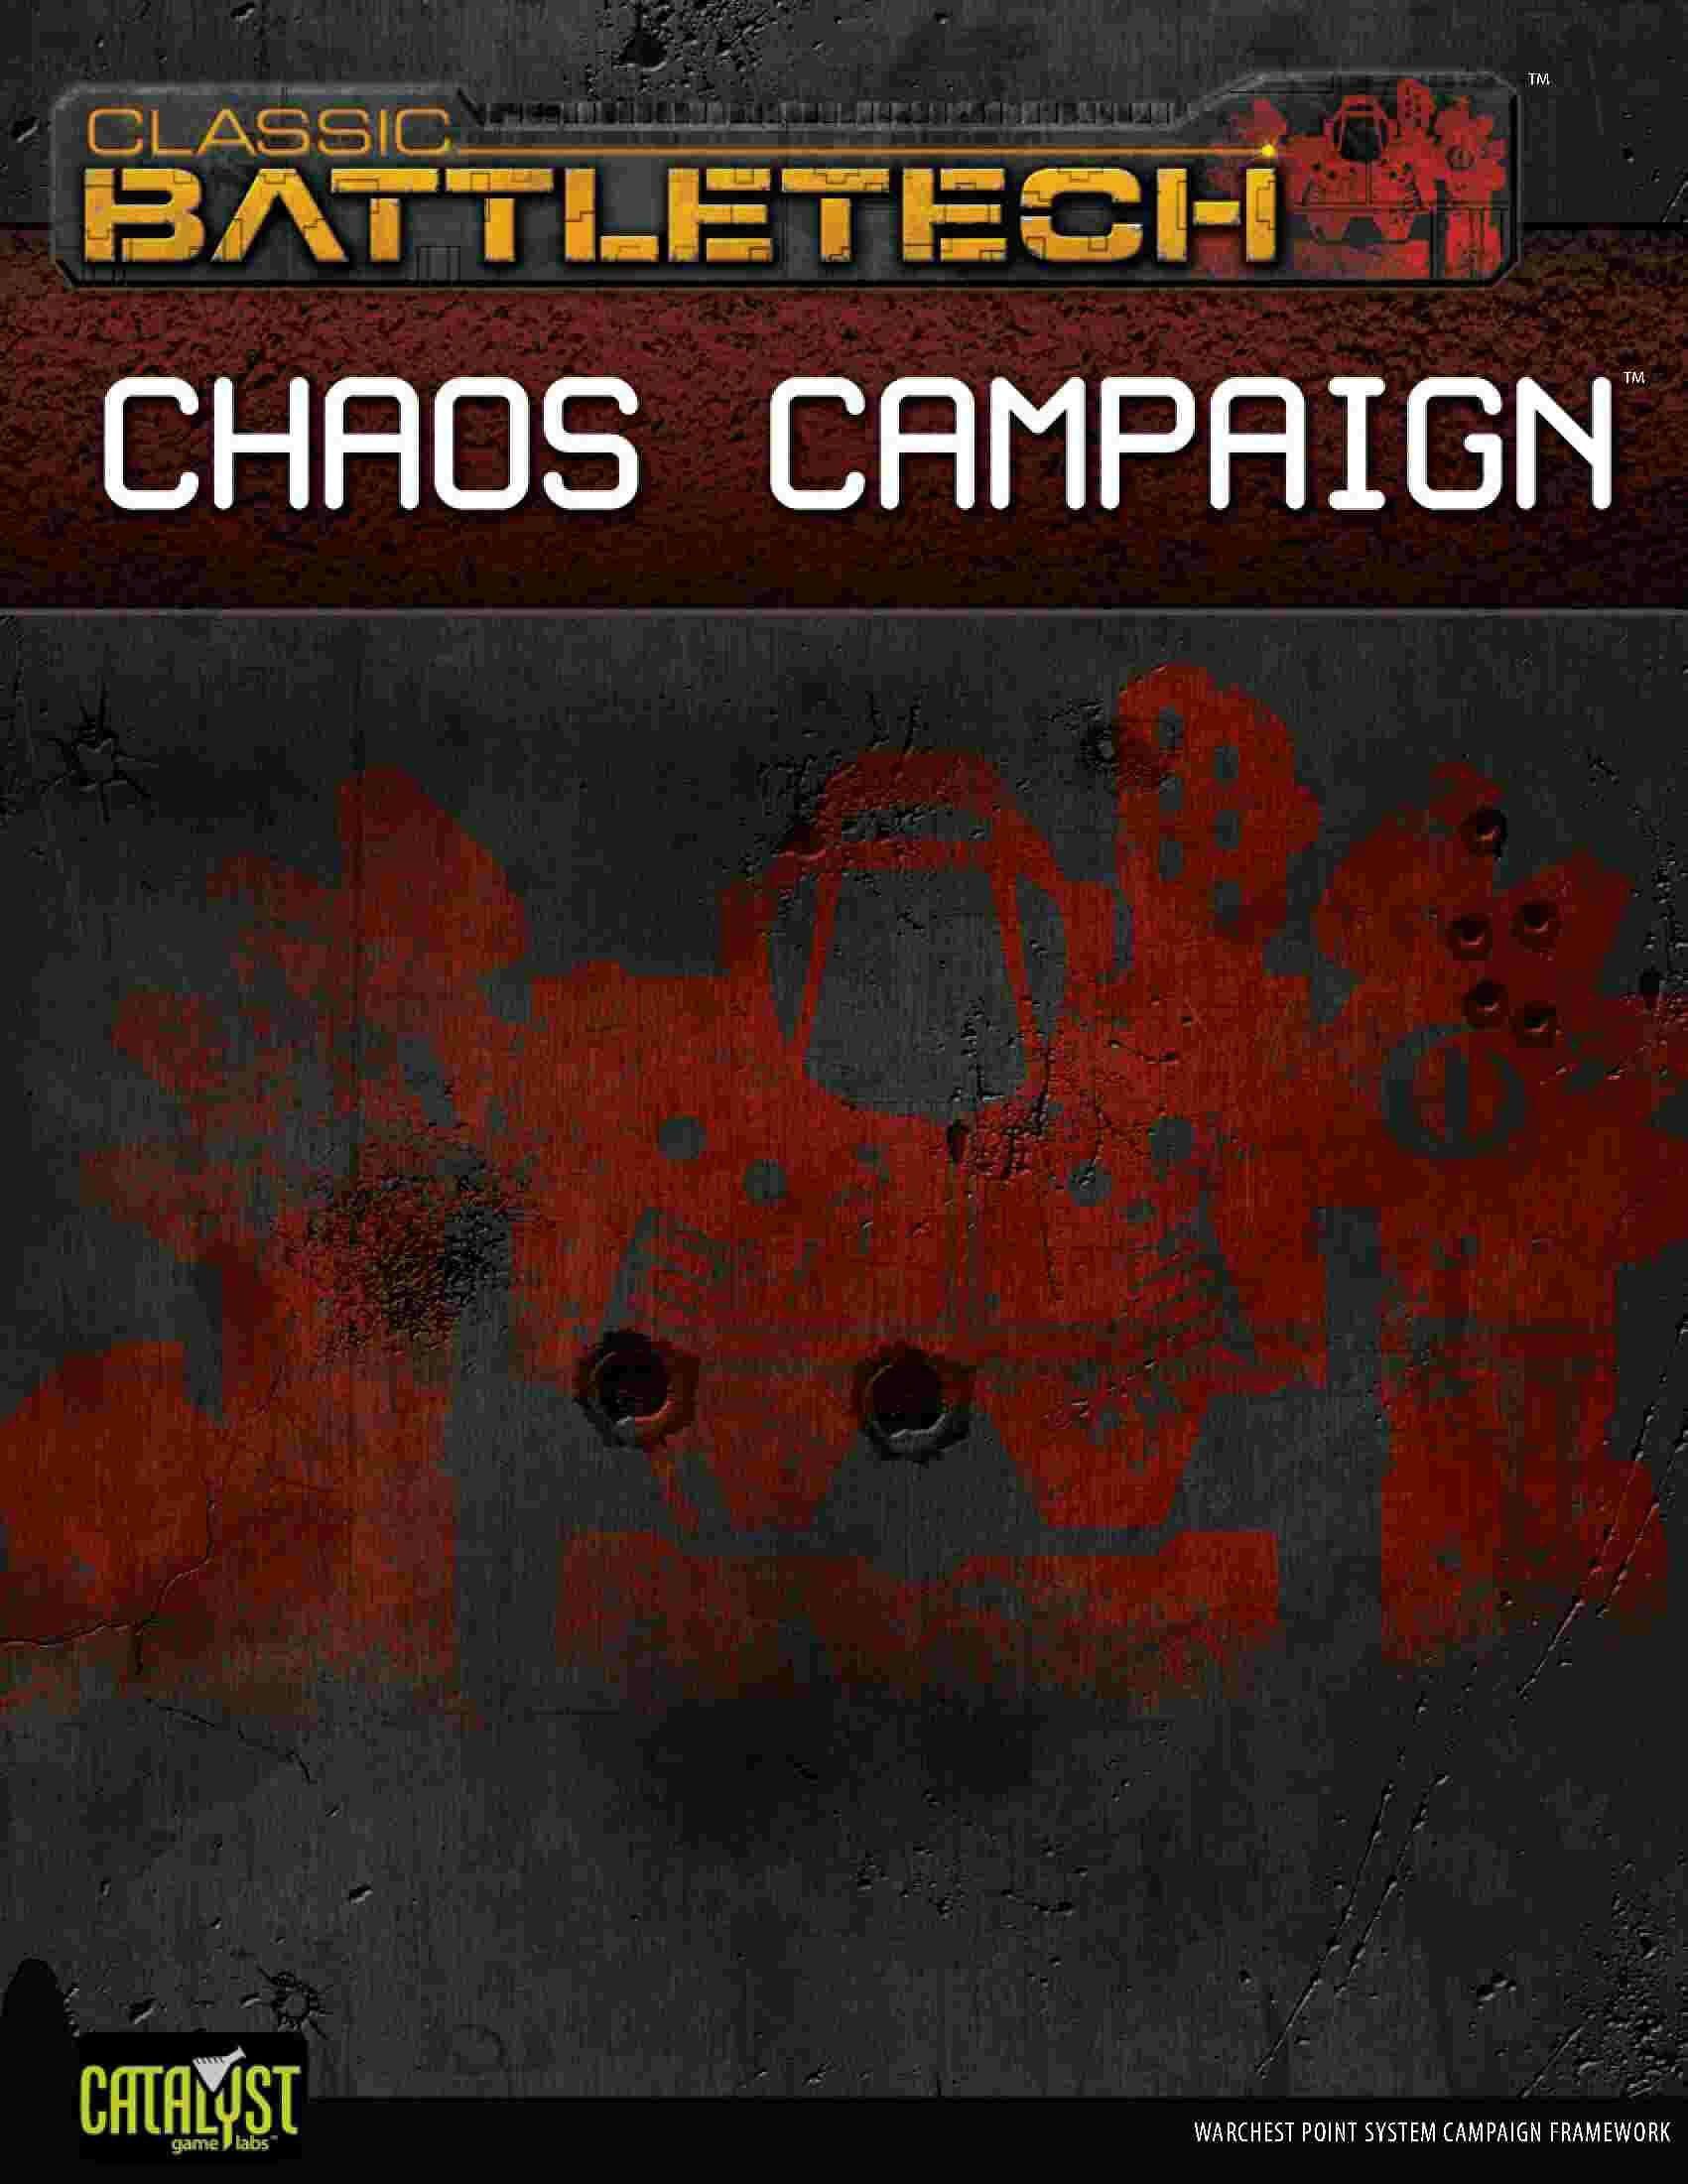 Battletech: Chaos Campaign